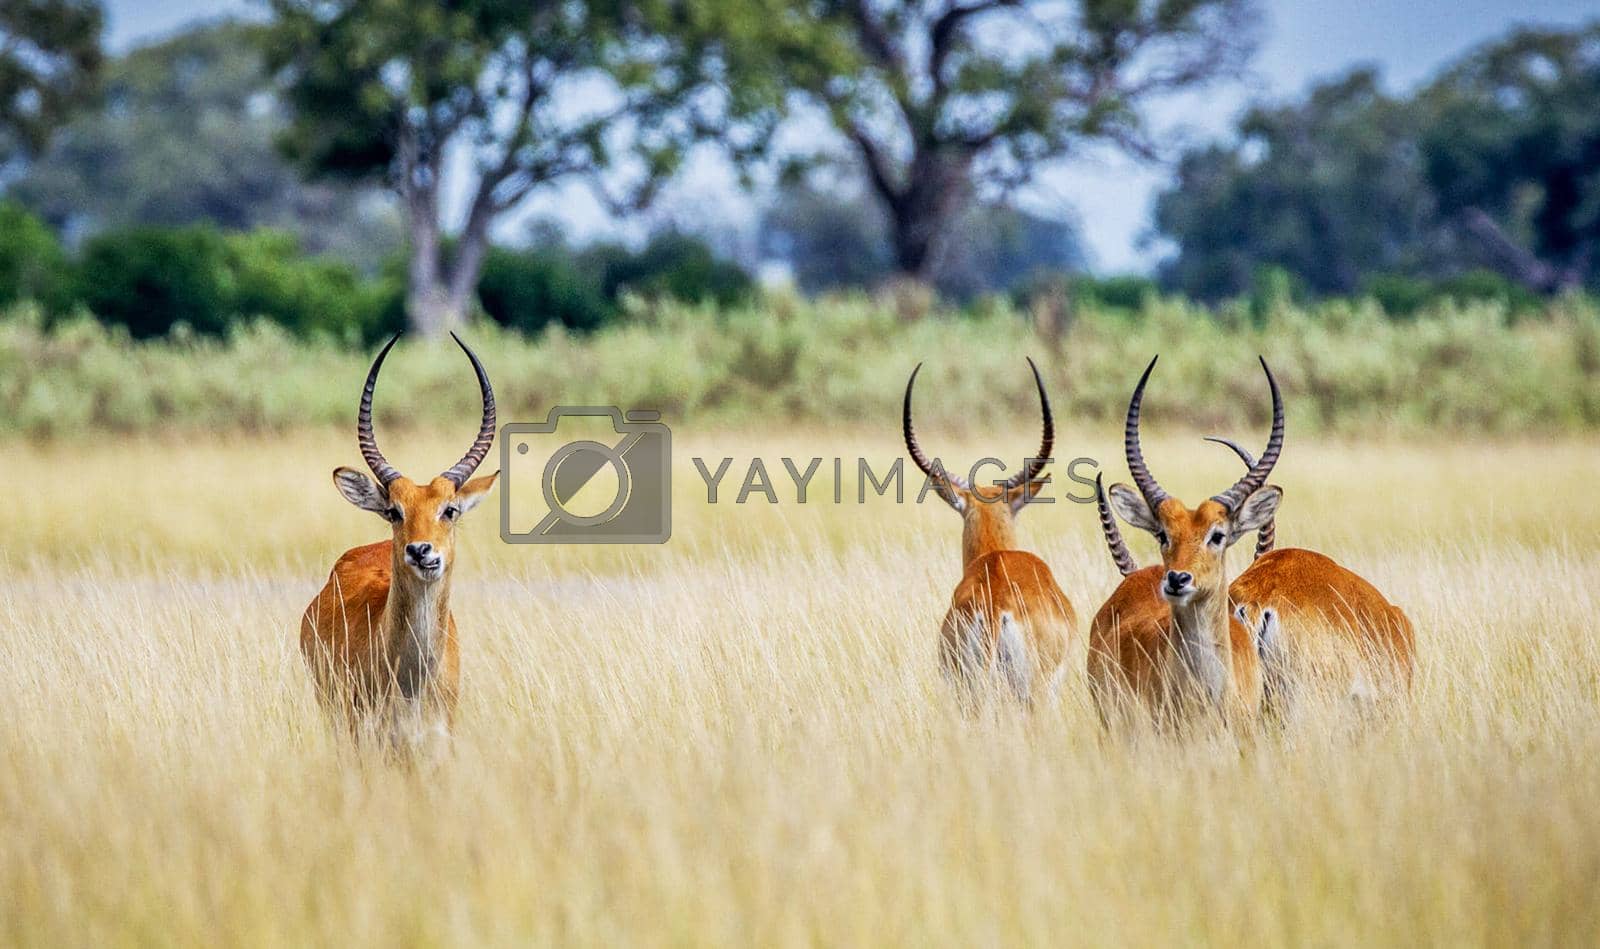 Royalty free image of Beautiful Wildlife places in Khwai, Botswana by TravelSync27